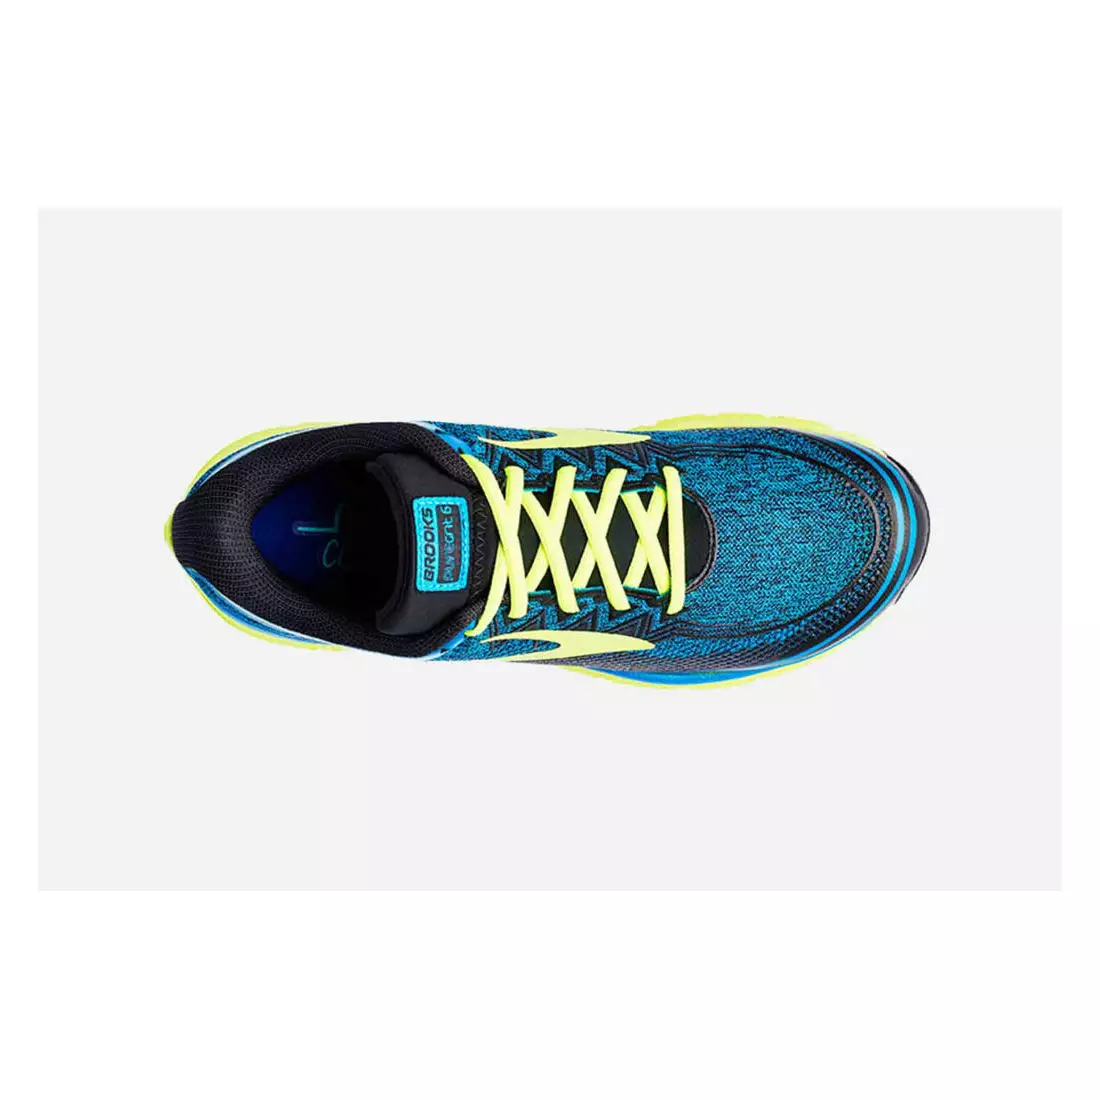 BROOKS PureGrit 6 running shoes 110259 1D 434